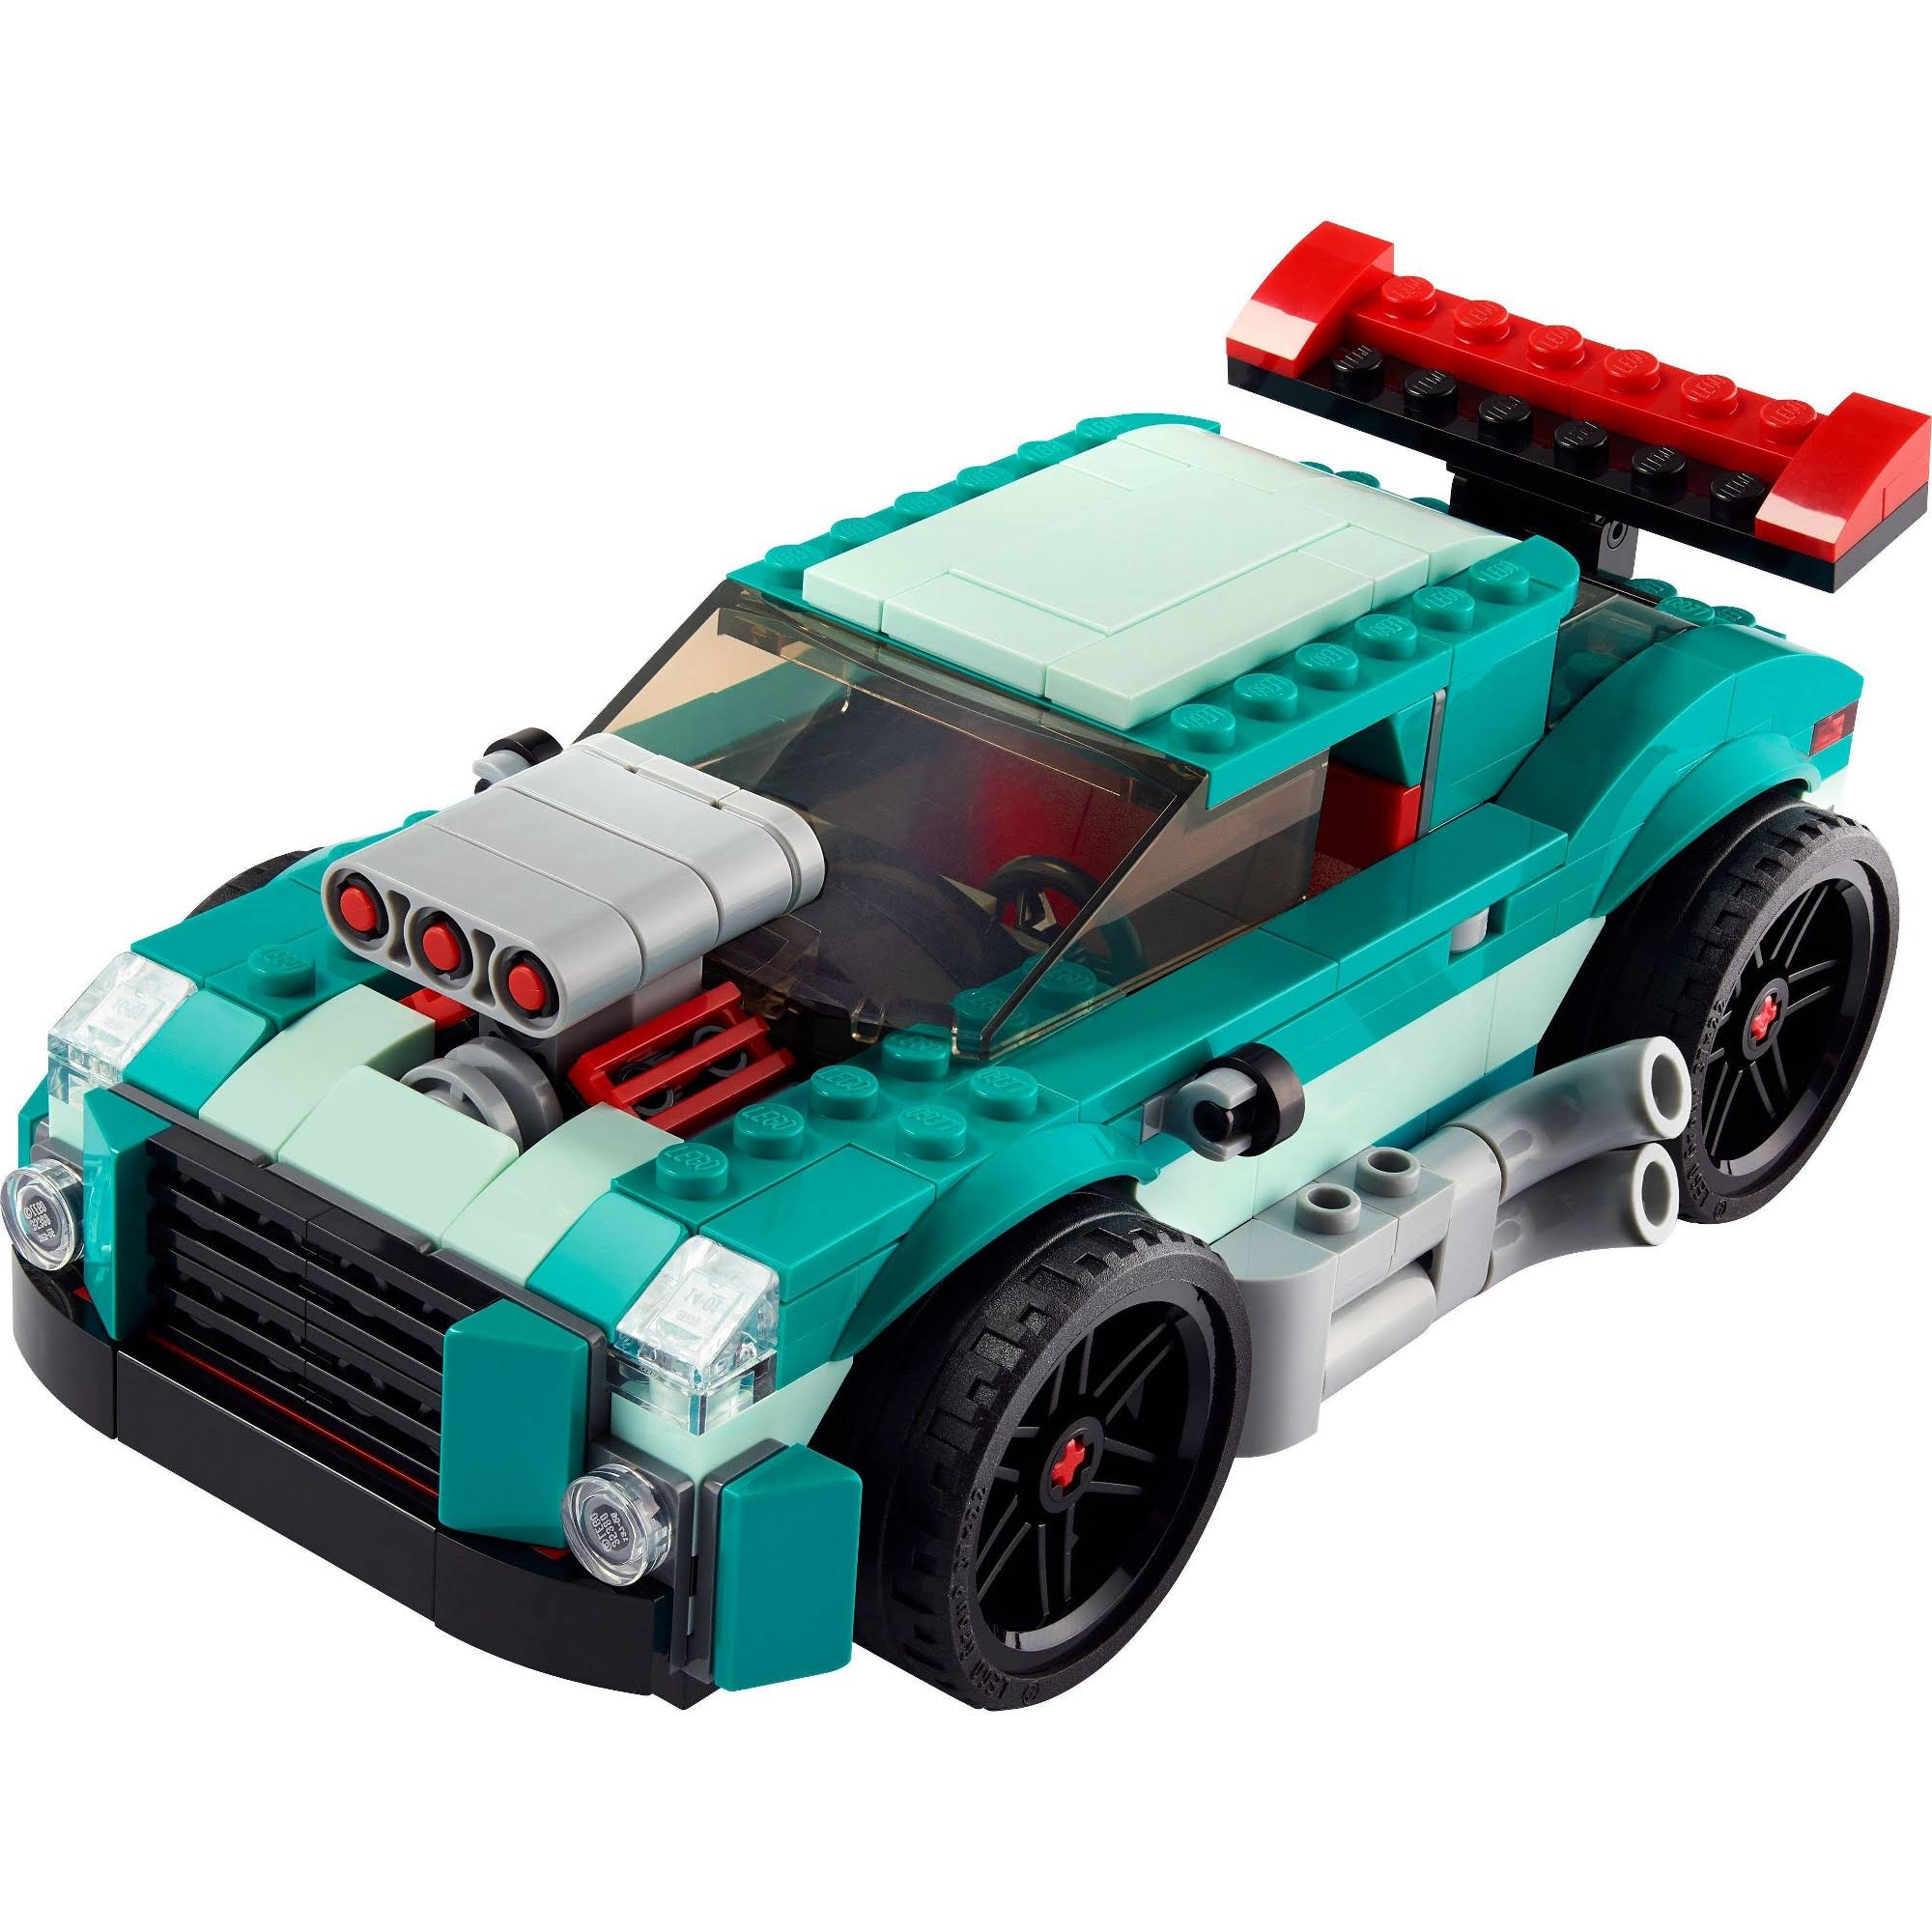 Lego 31127 Creator Street Racer